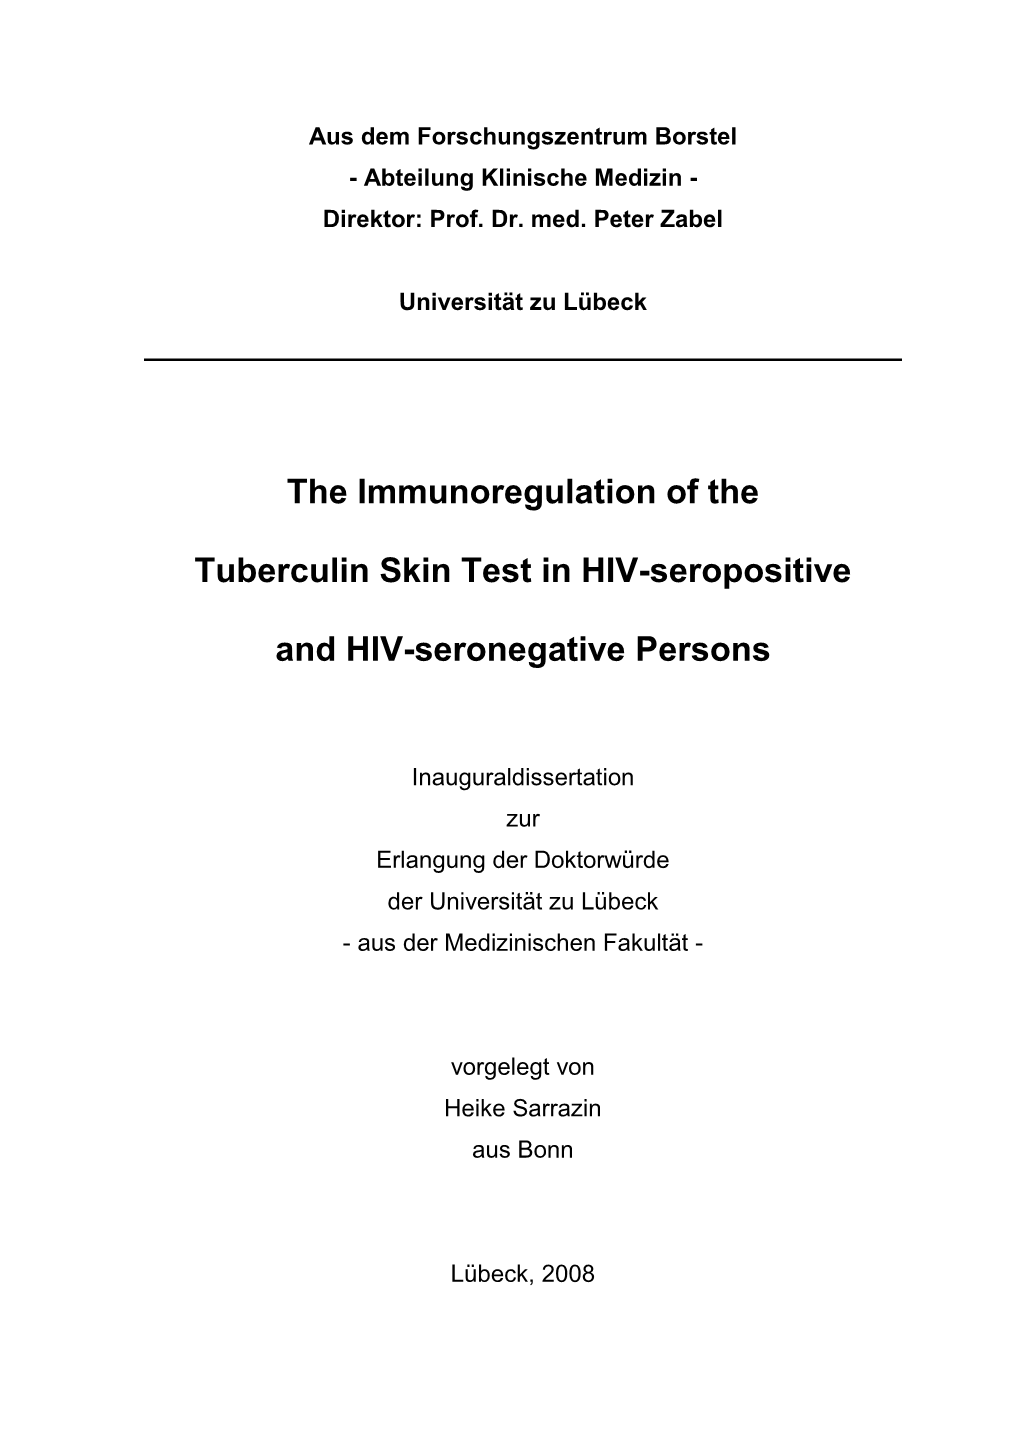 The Immunoregulation of the Tuberculin Skin Test in HIV-Seropositive and HIV-Seronegative Persons